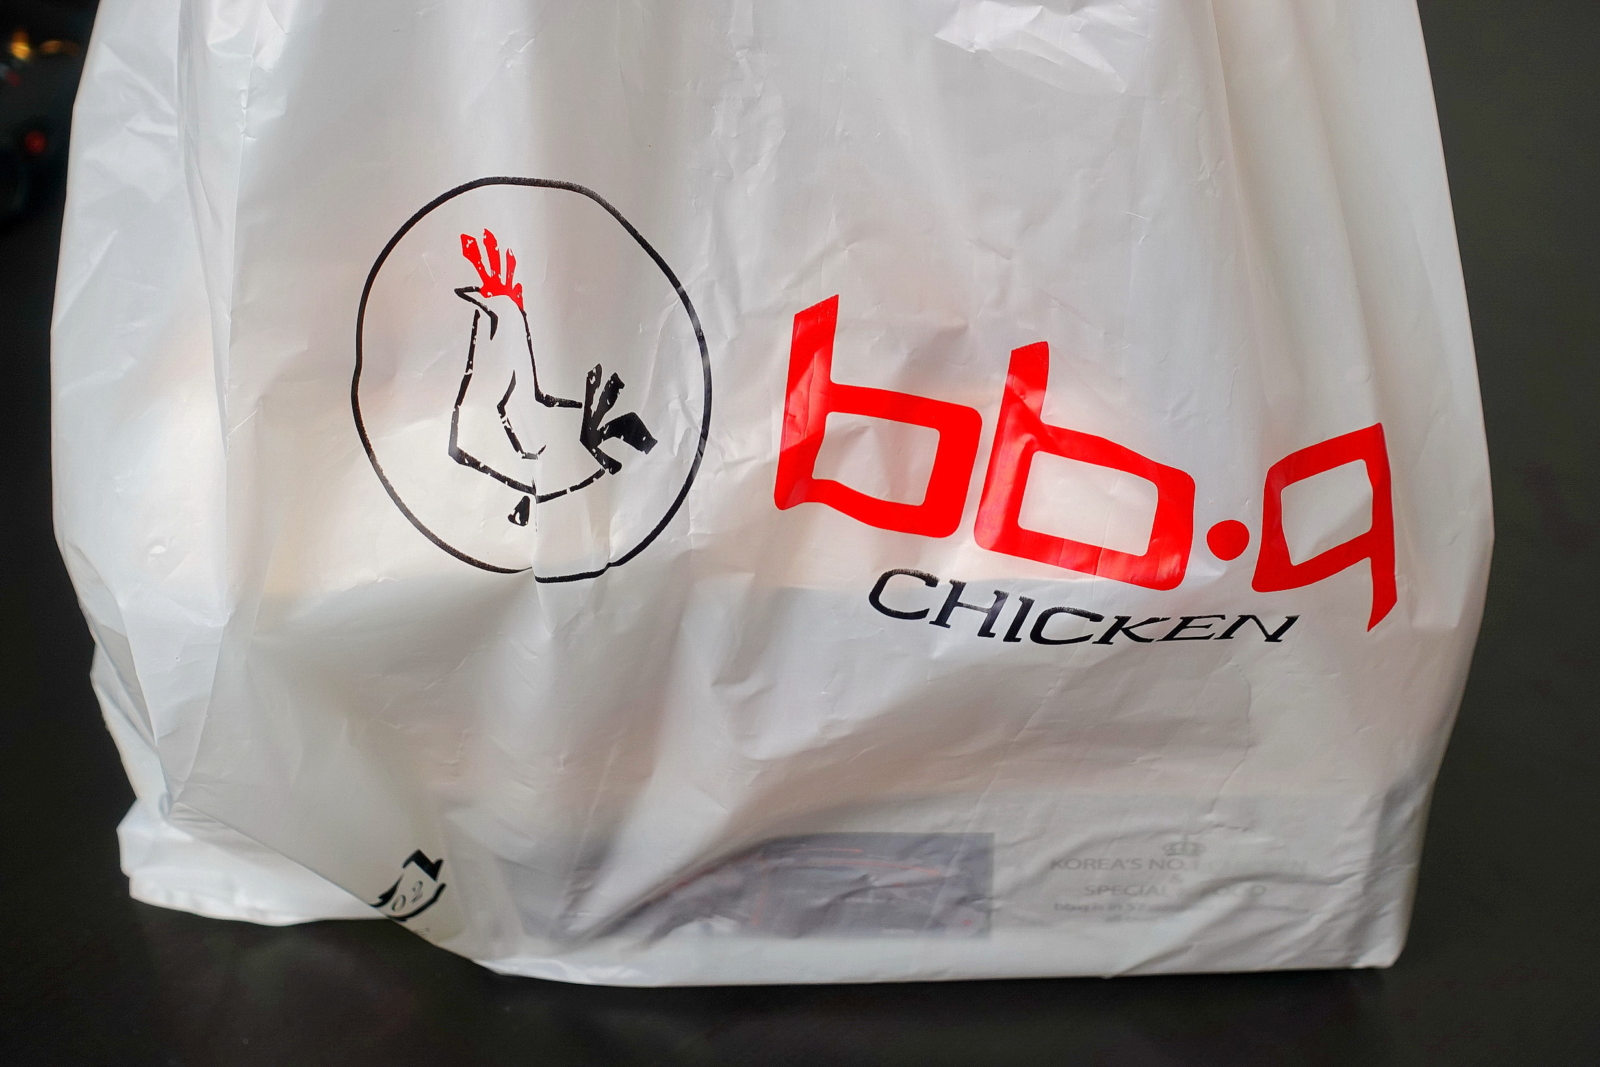 bbq Chicken